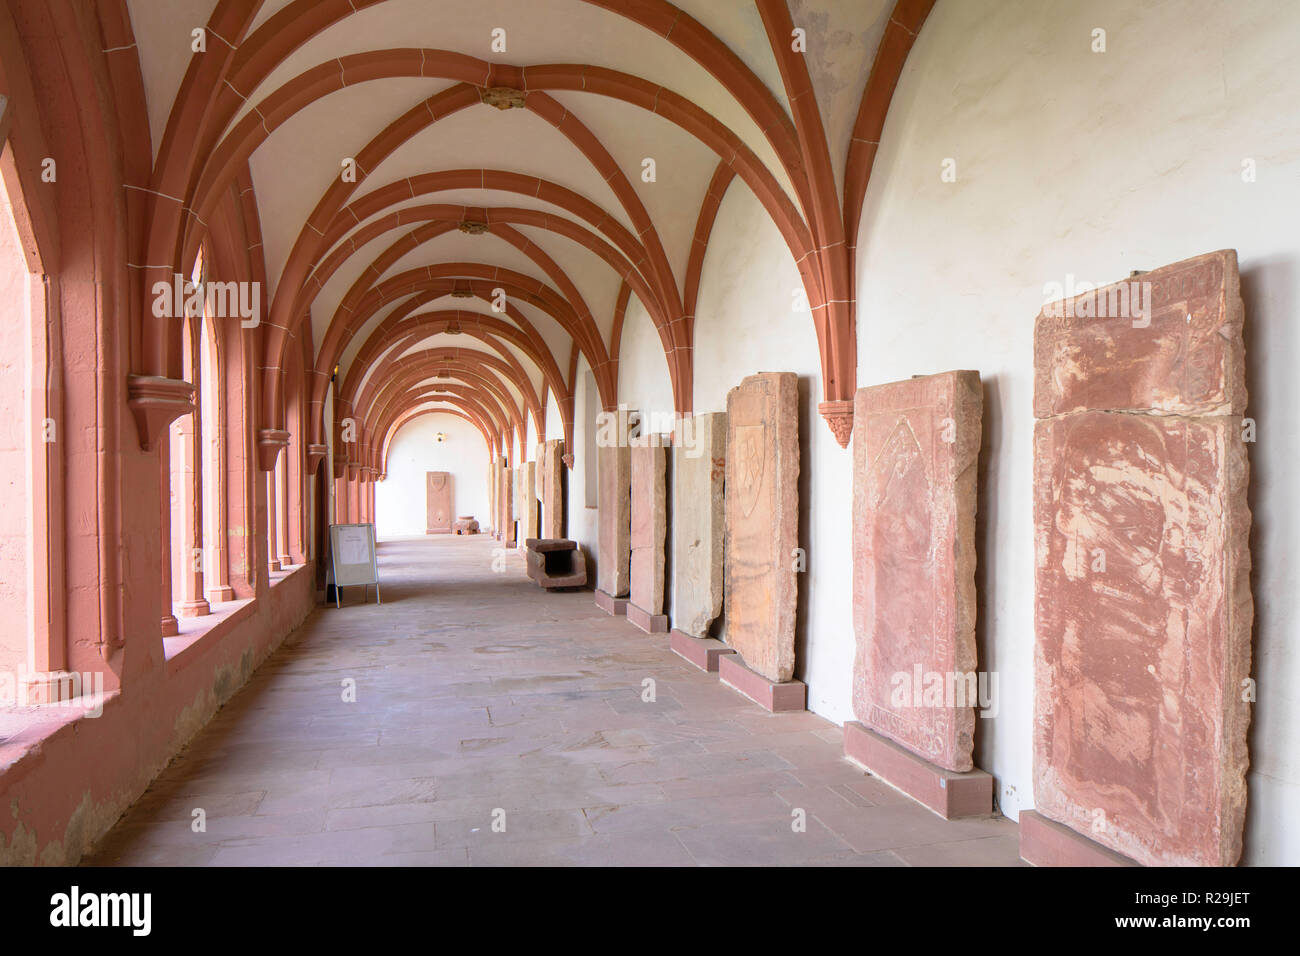 Cloister of Kloster Eberbach (Eberbach Monastery), Eichberg, Rhineland-Palatinate, Germany Stock Photo